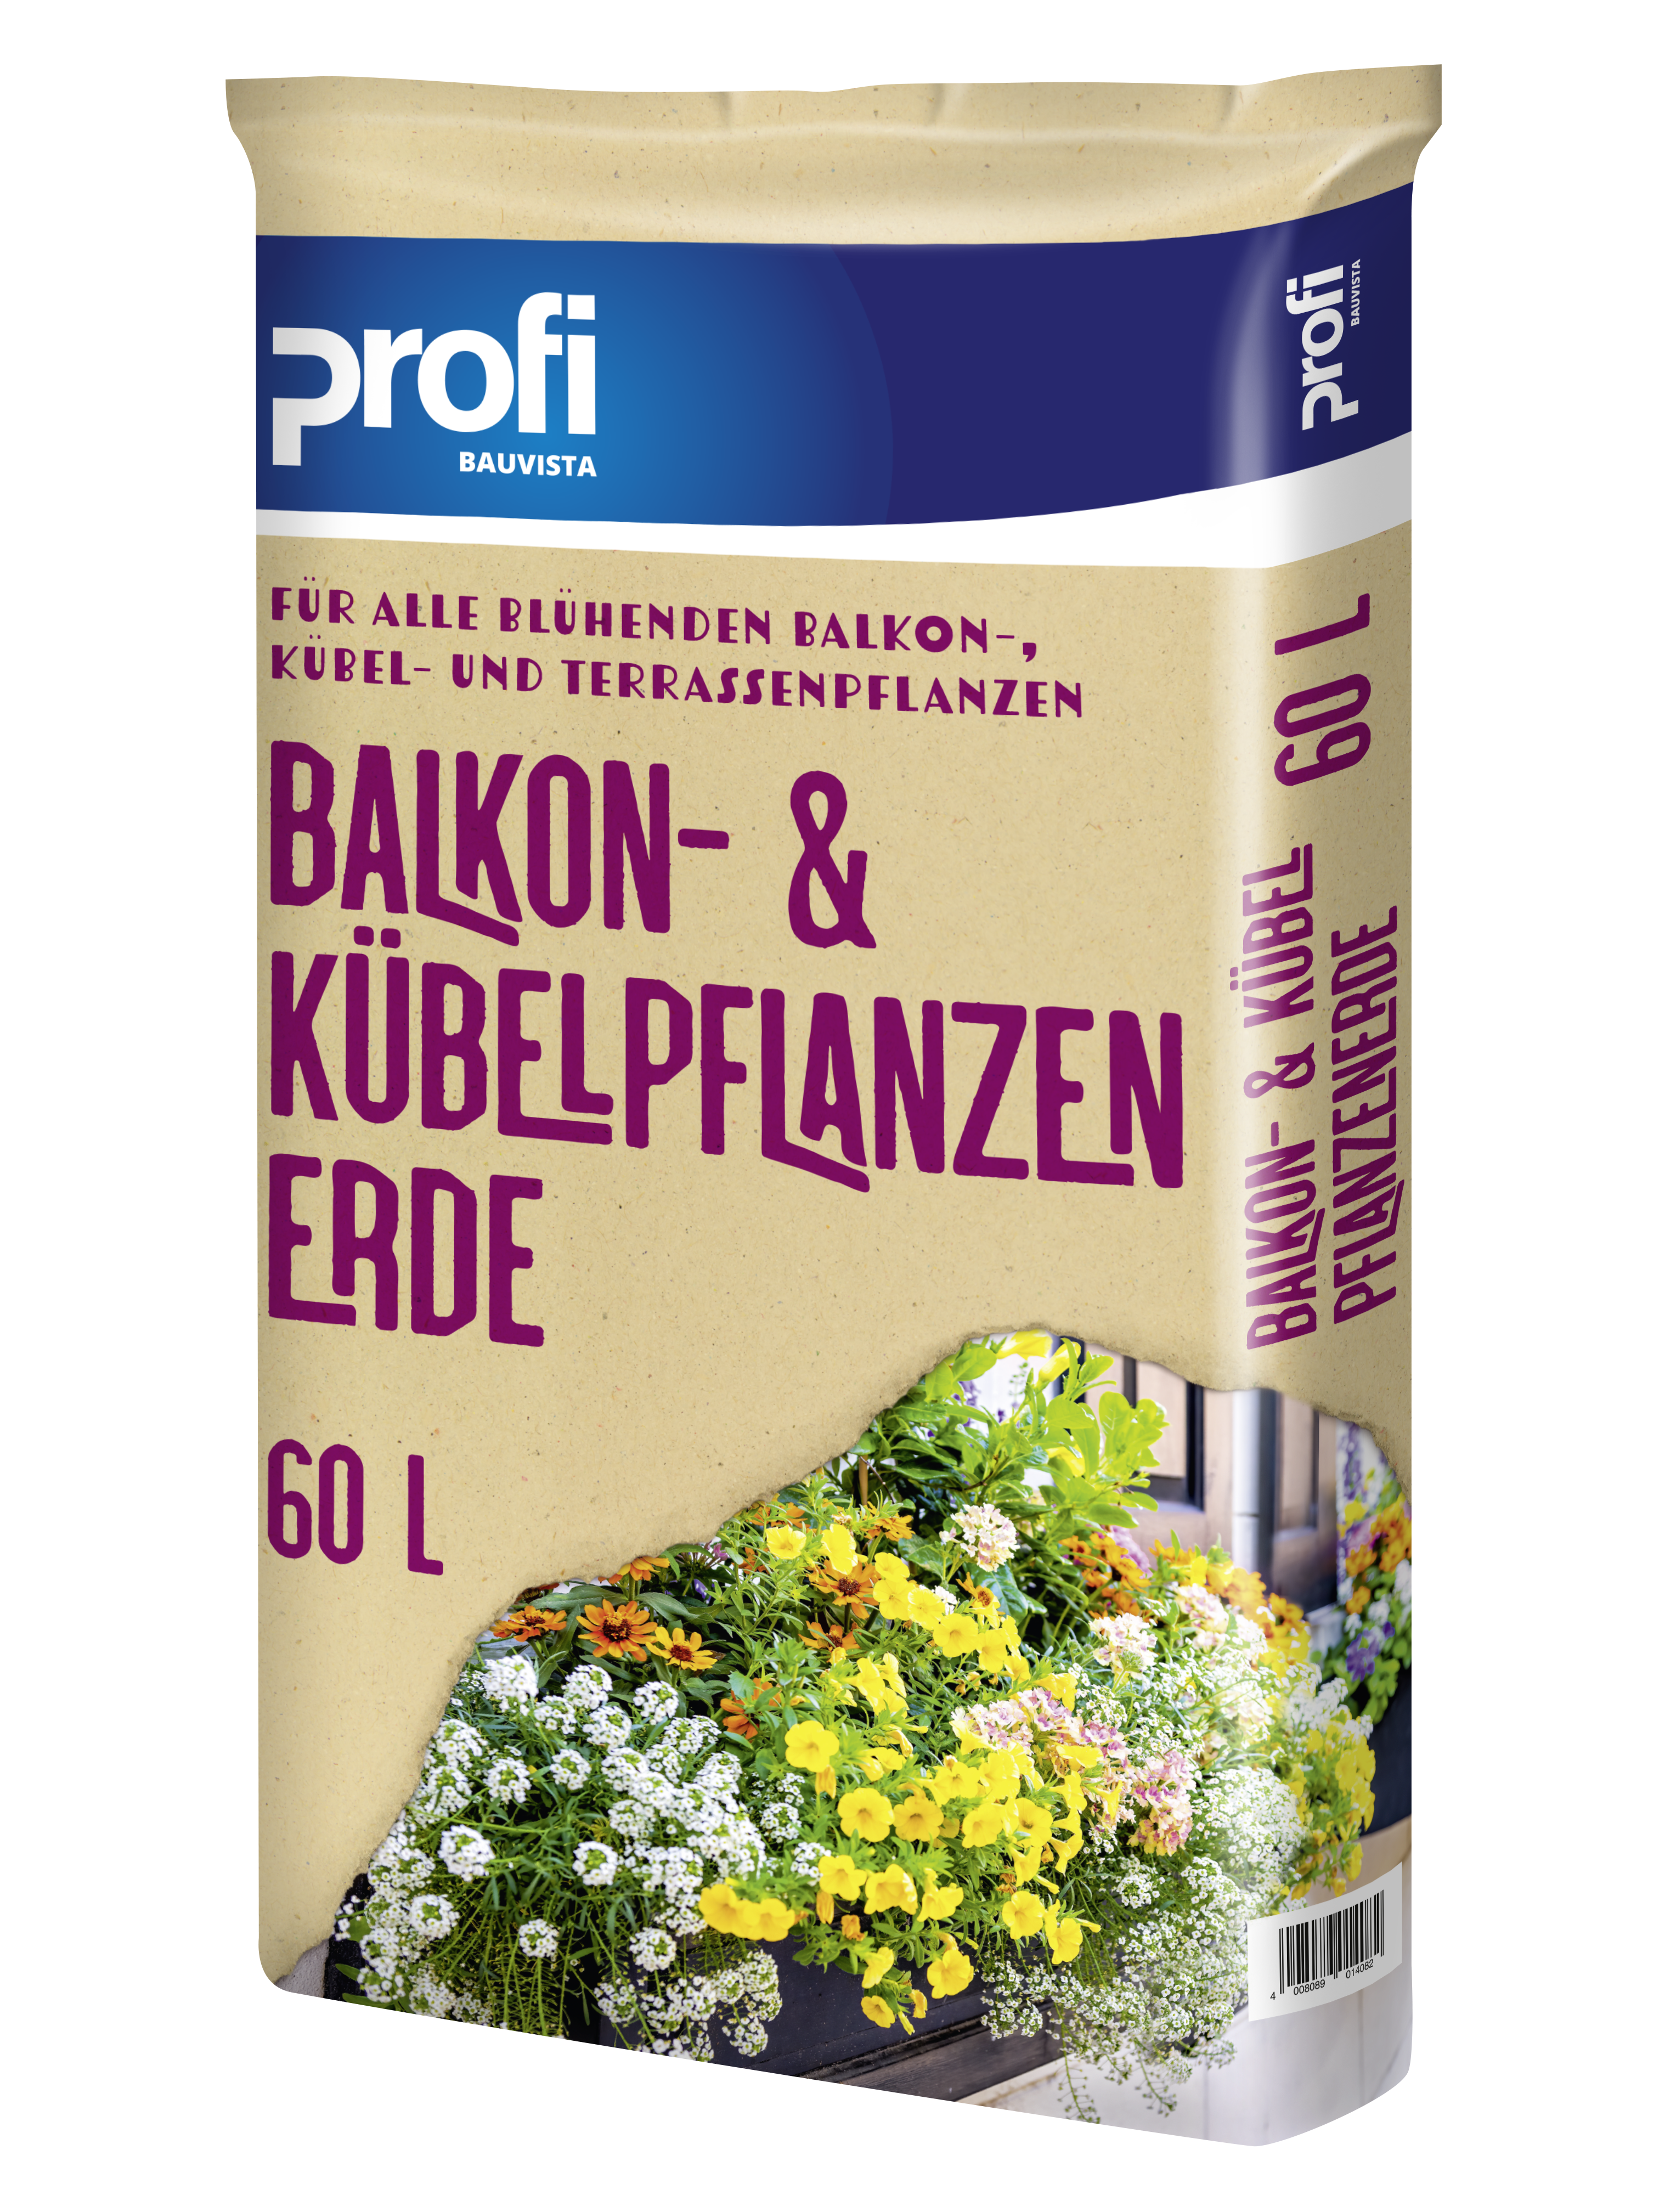 Profi Balkon- und Kübelpflanzenerde 60 L